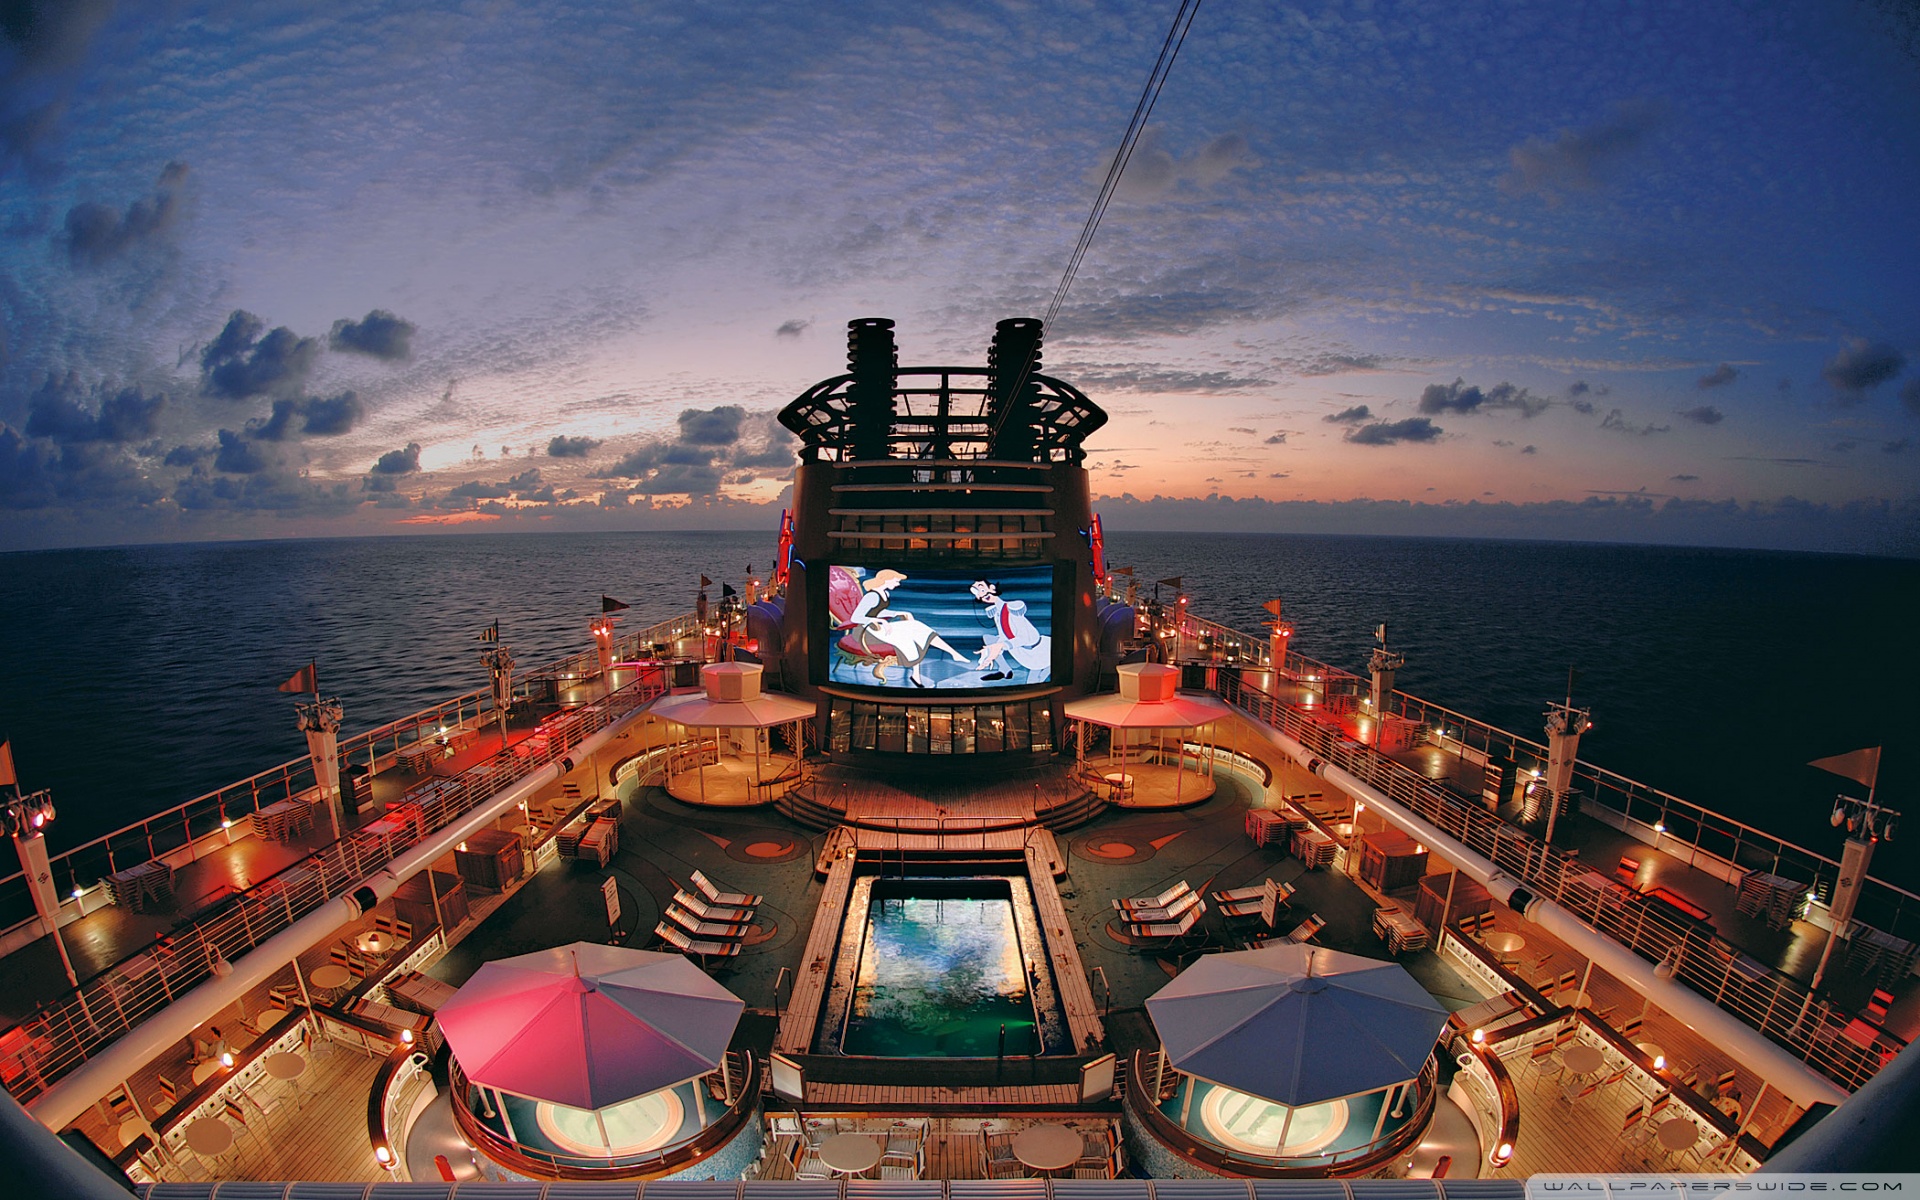 Cruise Ship Deck Night Ultra HD Desktop Background Wallpaper for 4K UHD TV, Widescreen & UltraWide Desktop & Laptop, Tablet